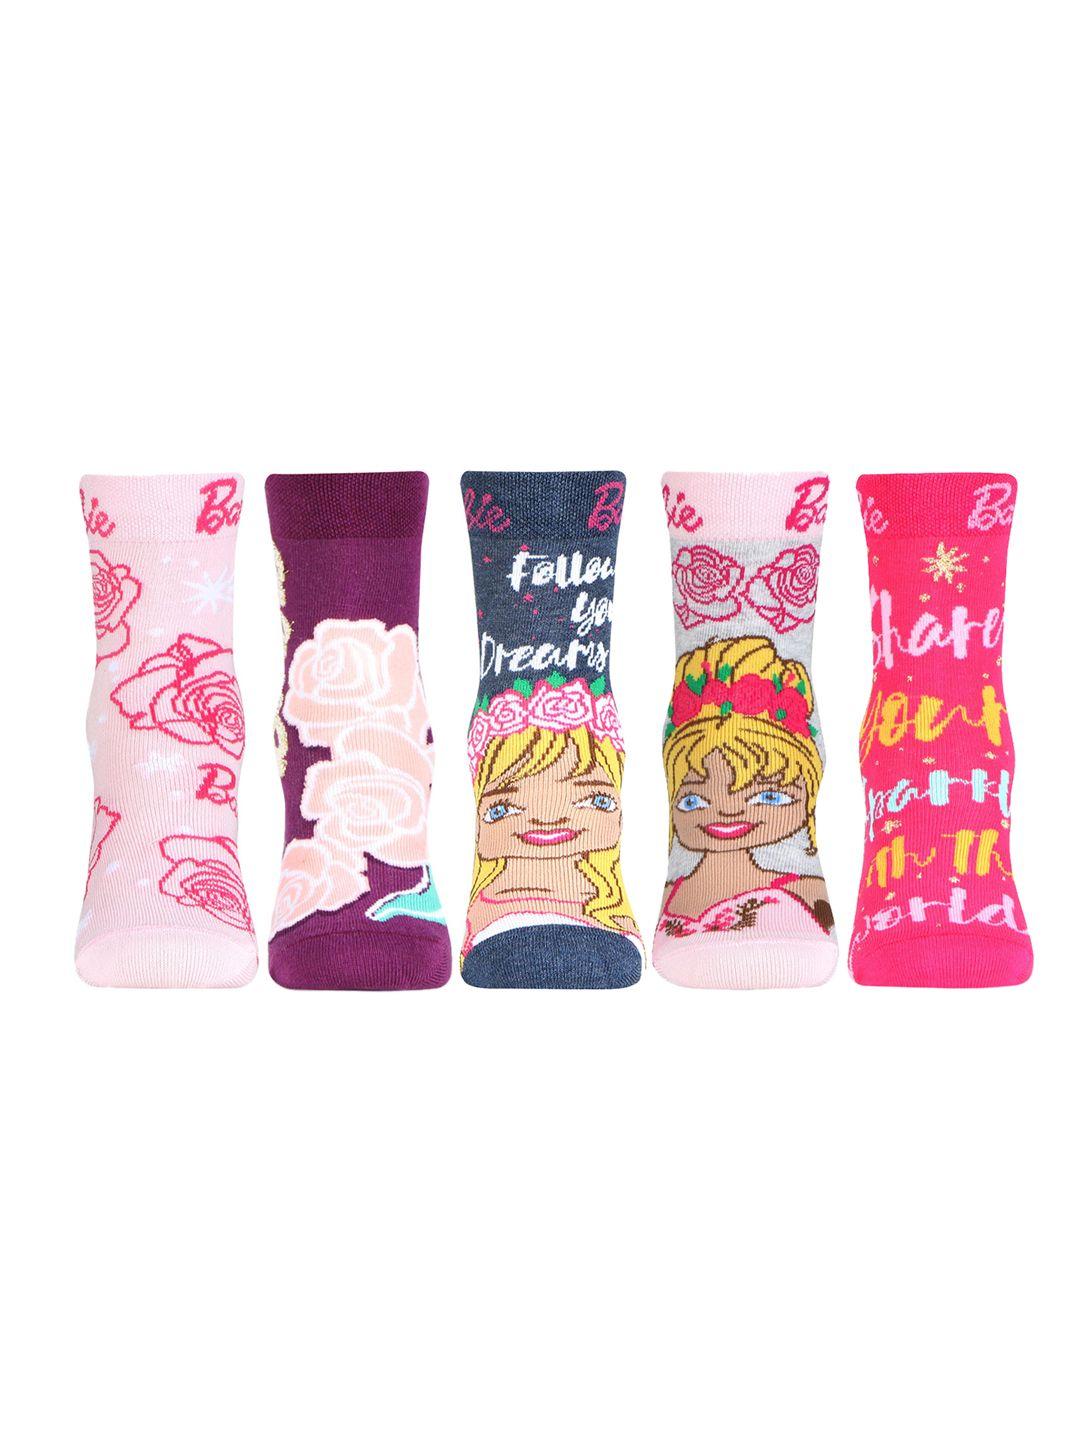 bonjour girls pack of 5 barbie patterned ankle length socks